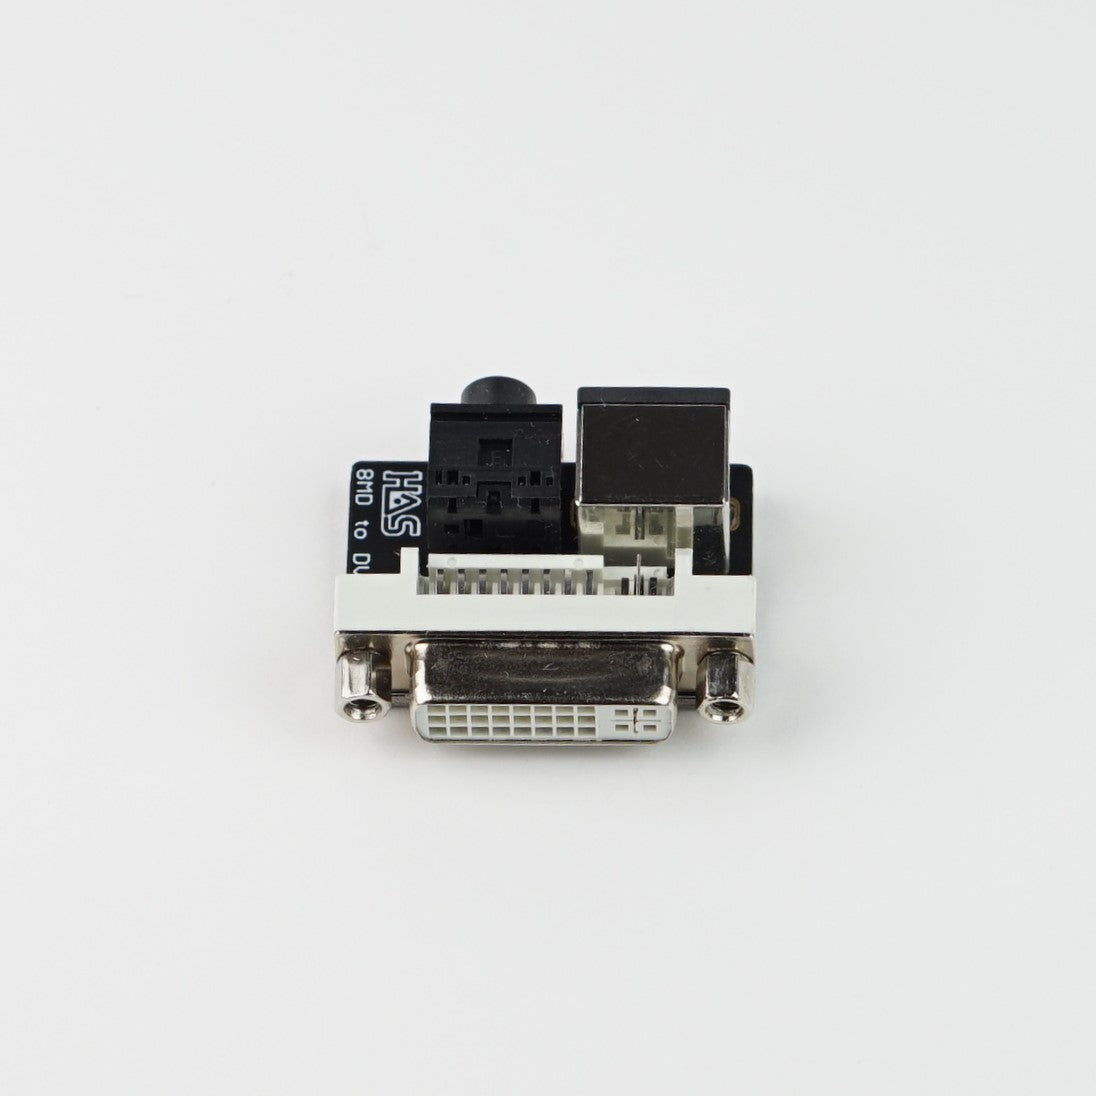 8 pin mini DIN to DVI-I adapter